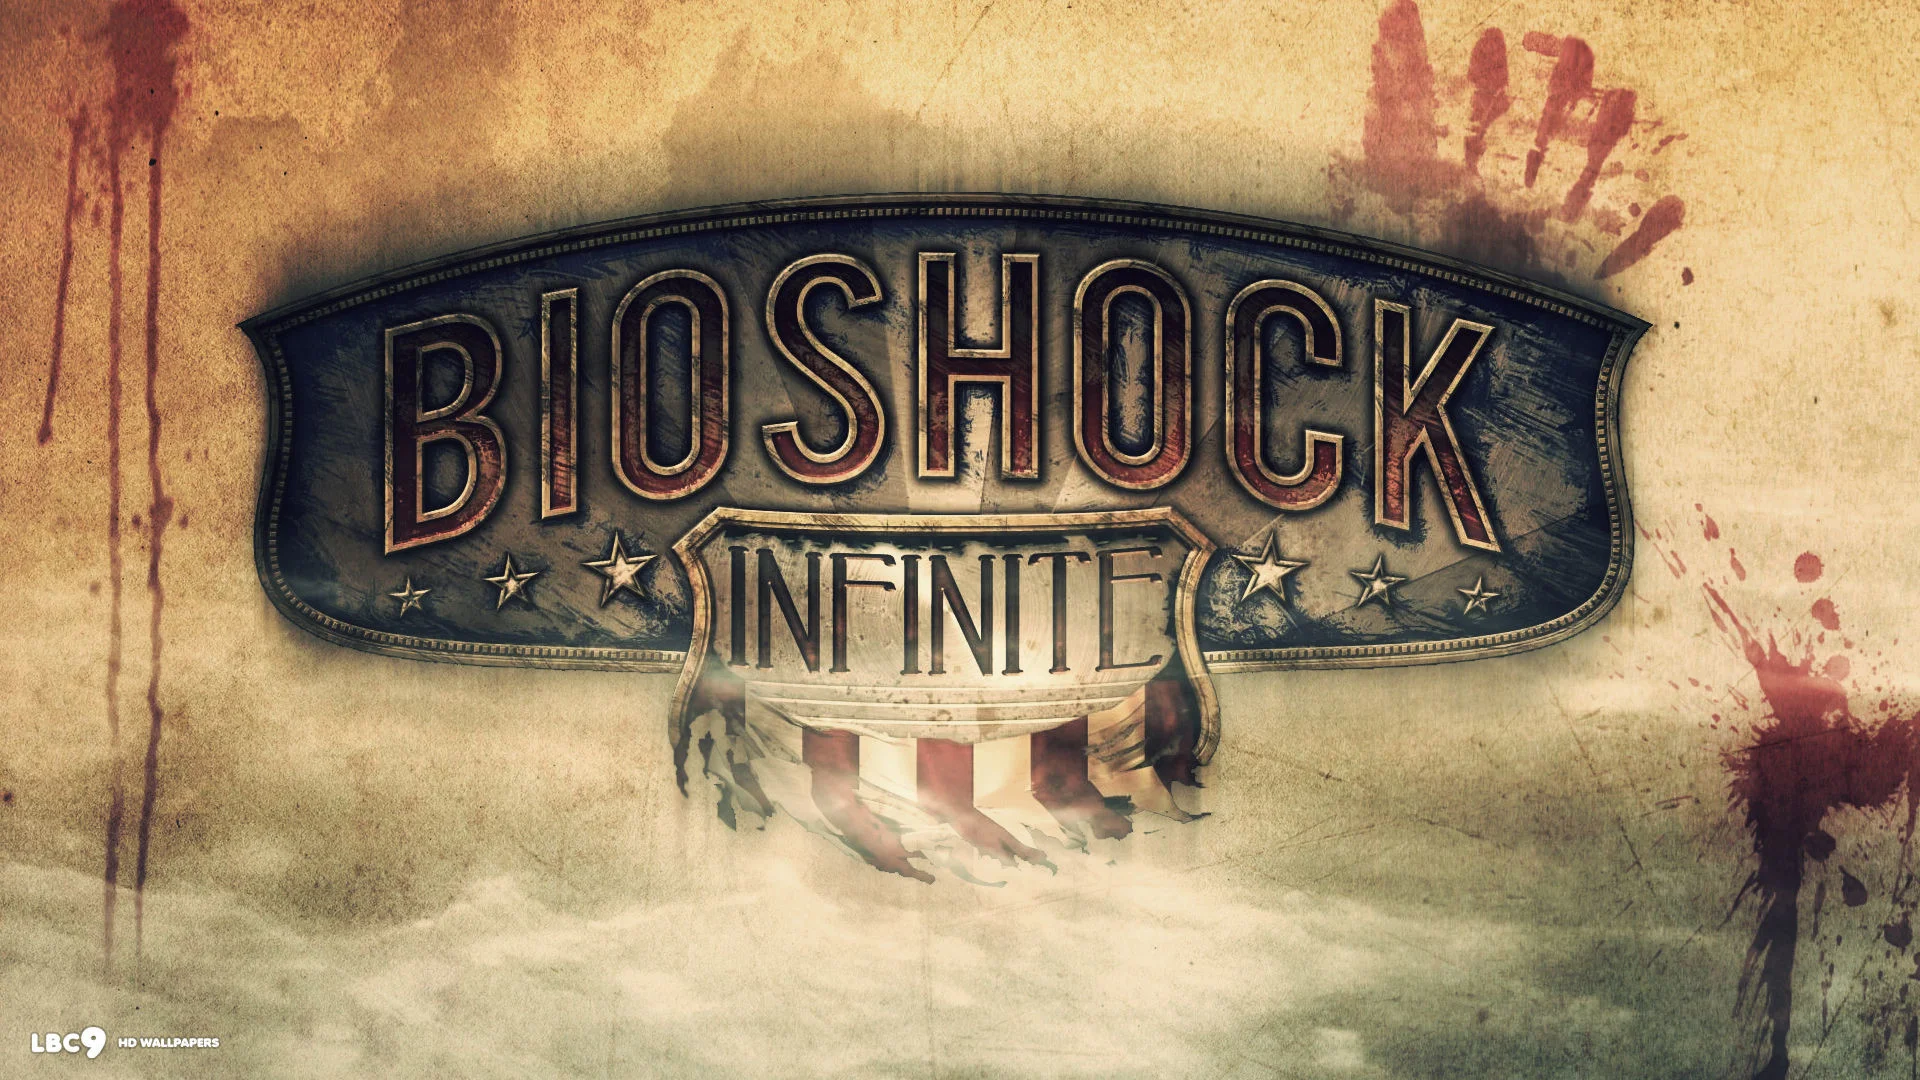 BioShock Infinite Logo